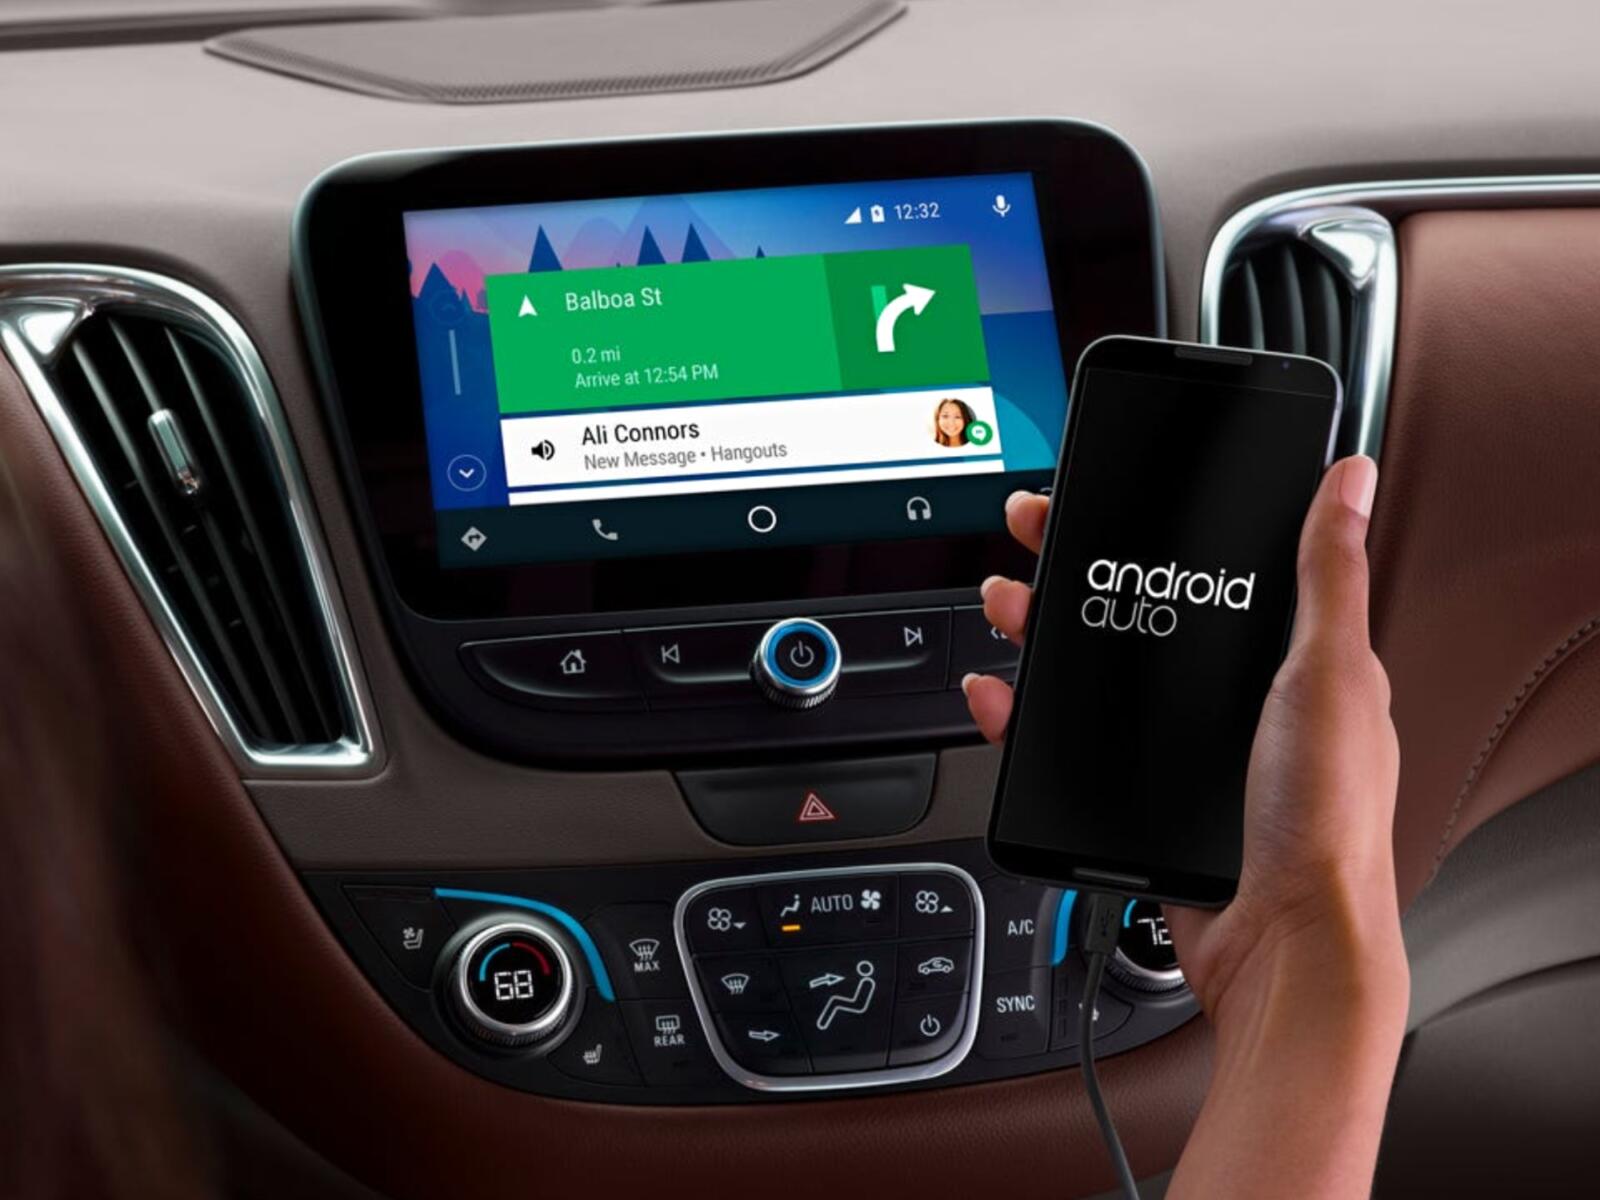 Android Auto kabellos nutzen: AAWireless geht den nächsten Schritt